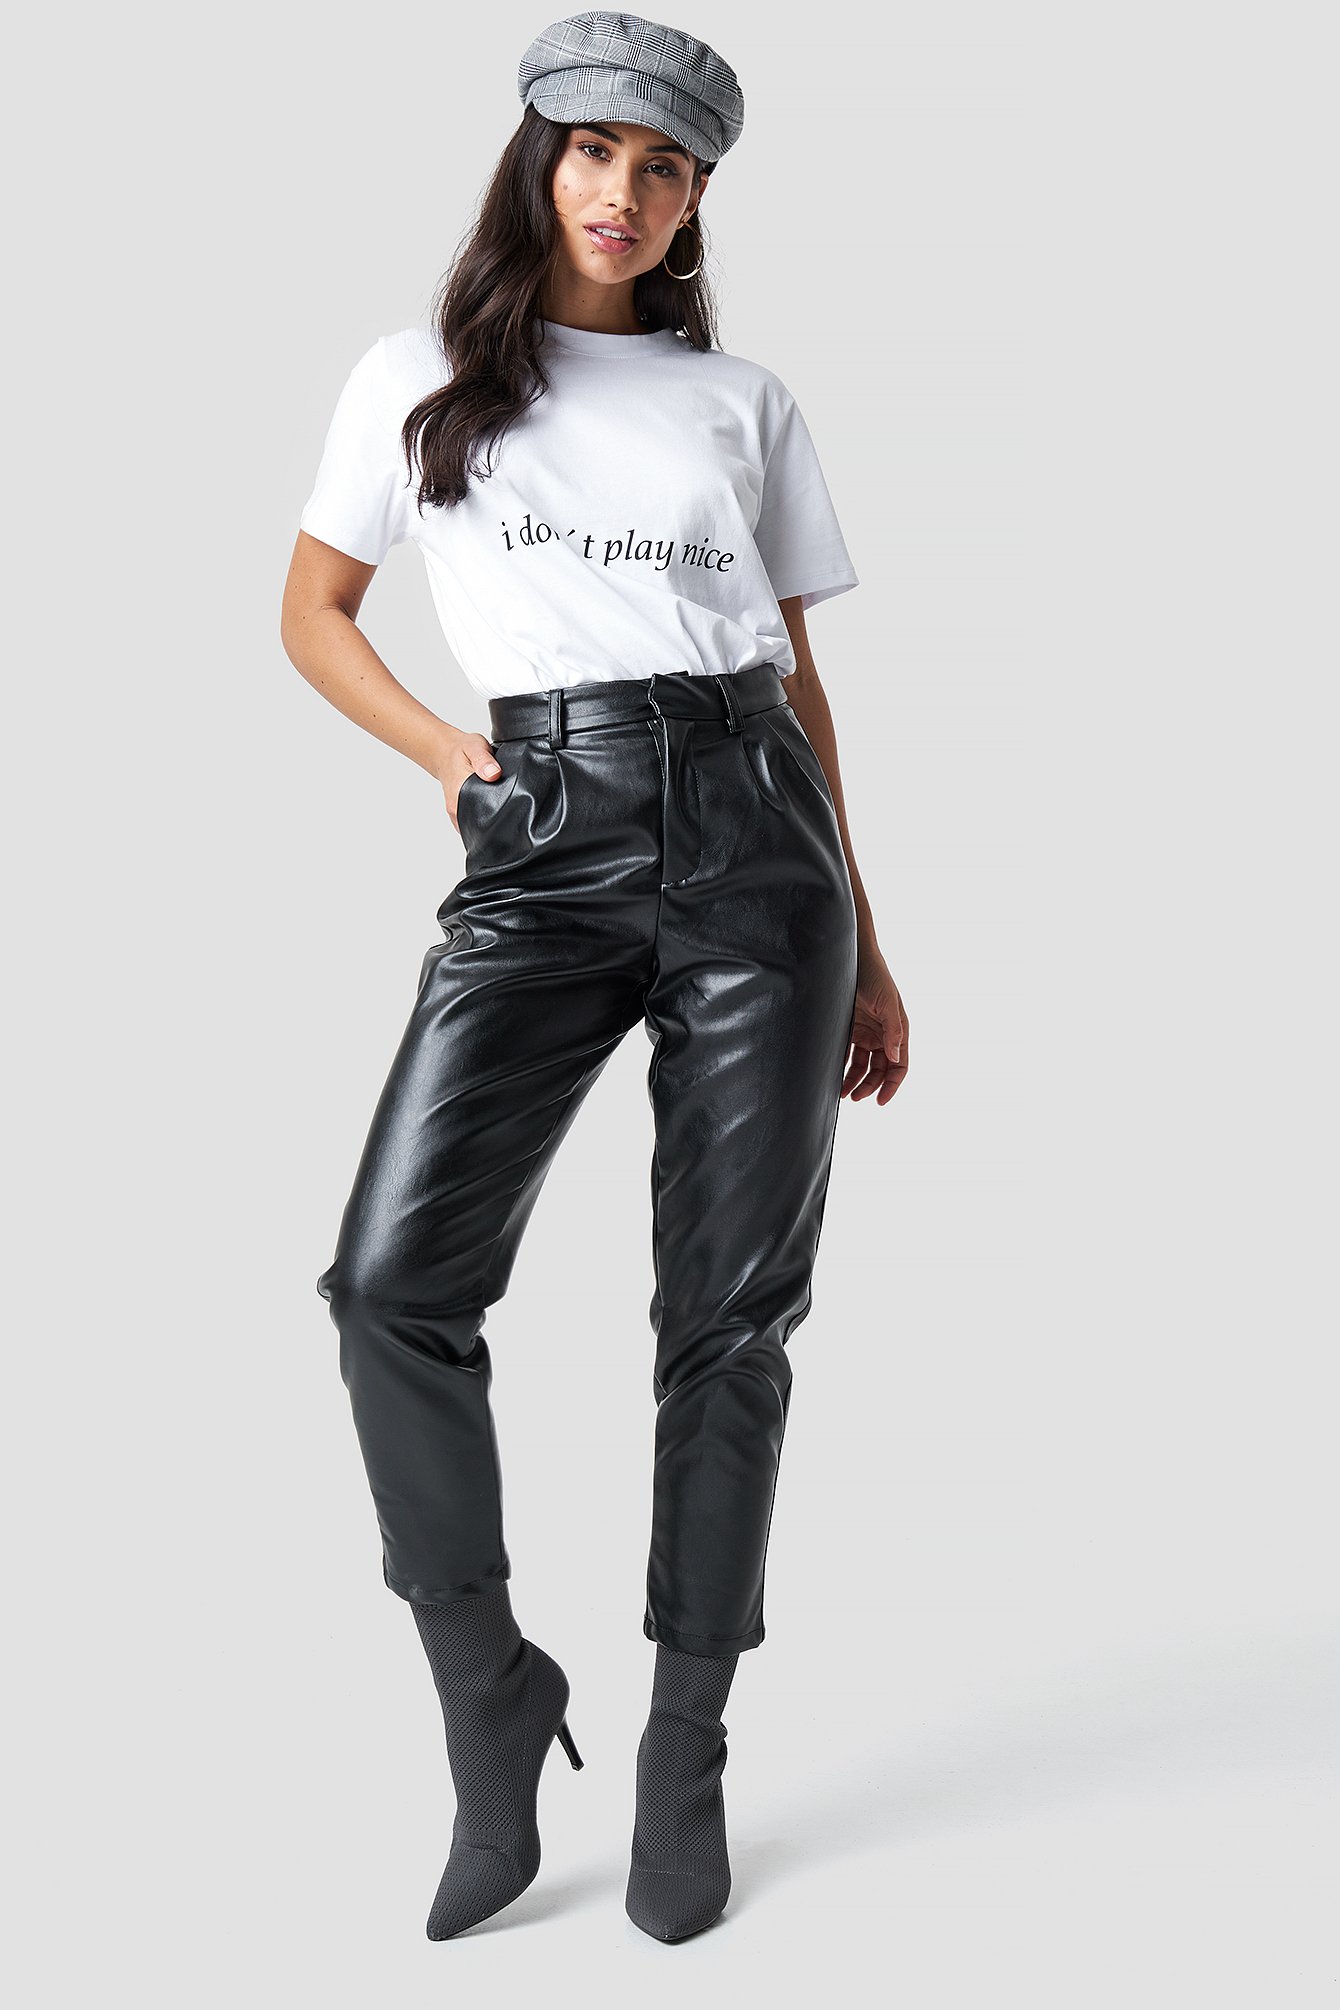 Chloé B X Na-kd  PU Leather Cropped Pants - Black